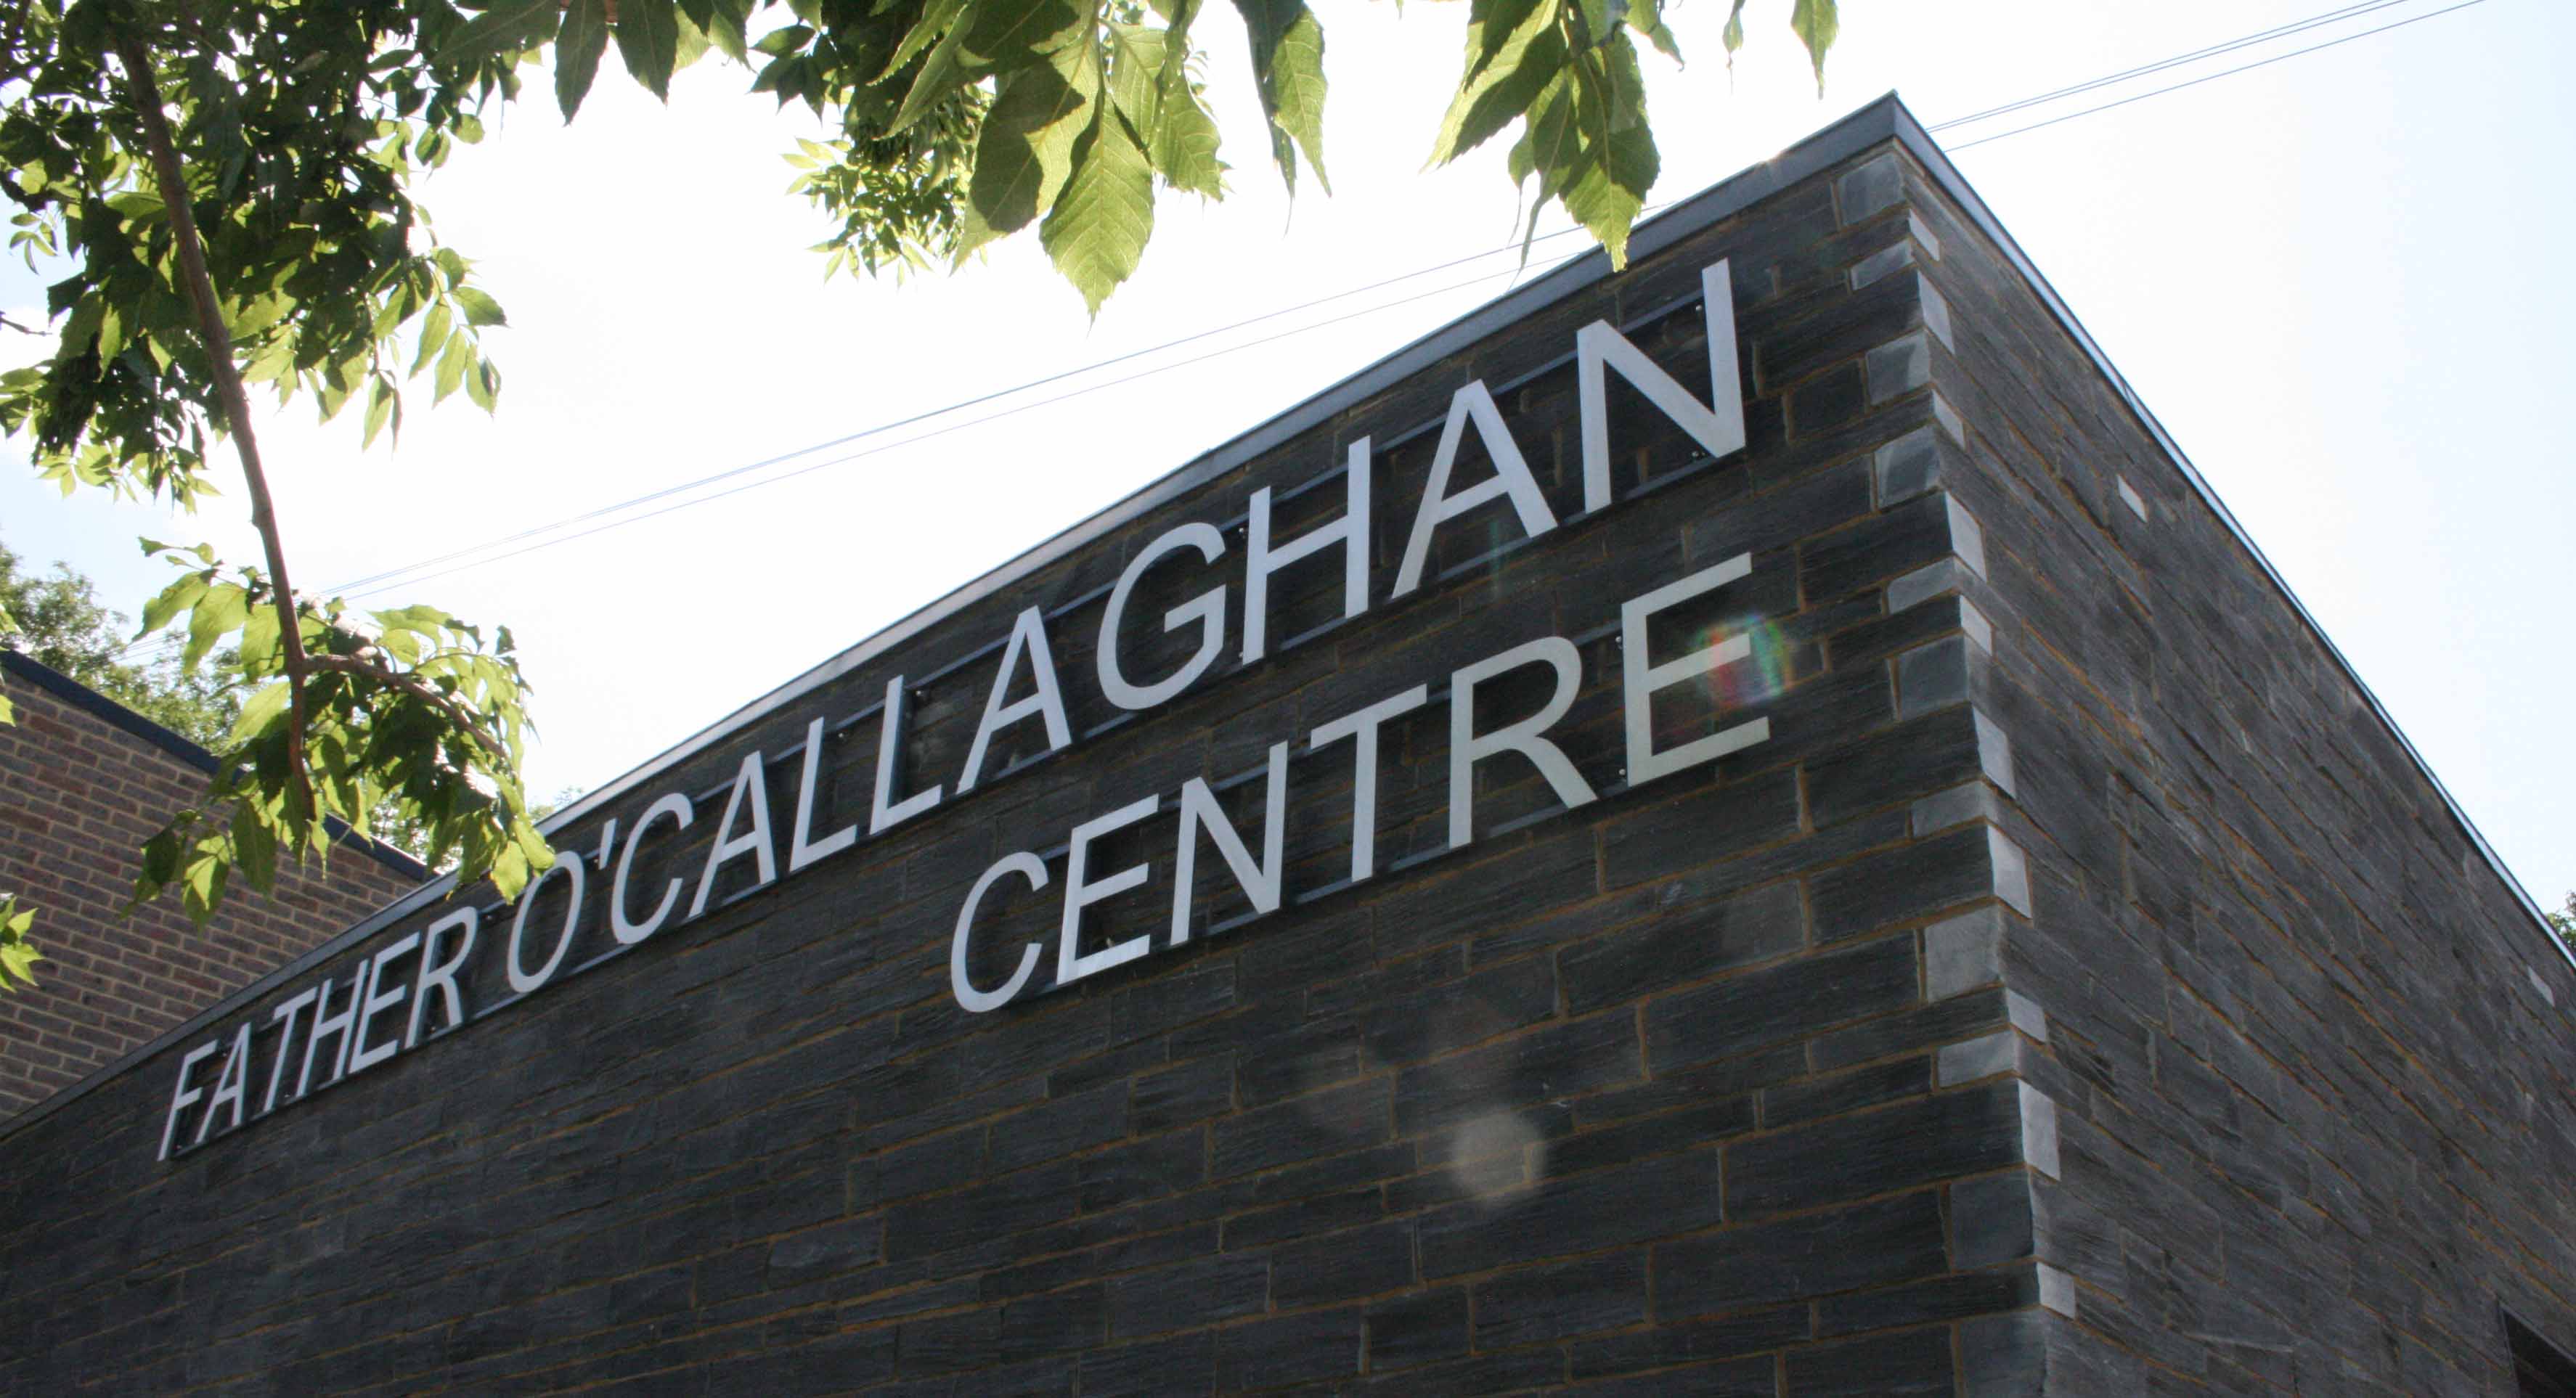 Fr. O'Callaghan Centre, Kingsbury Green